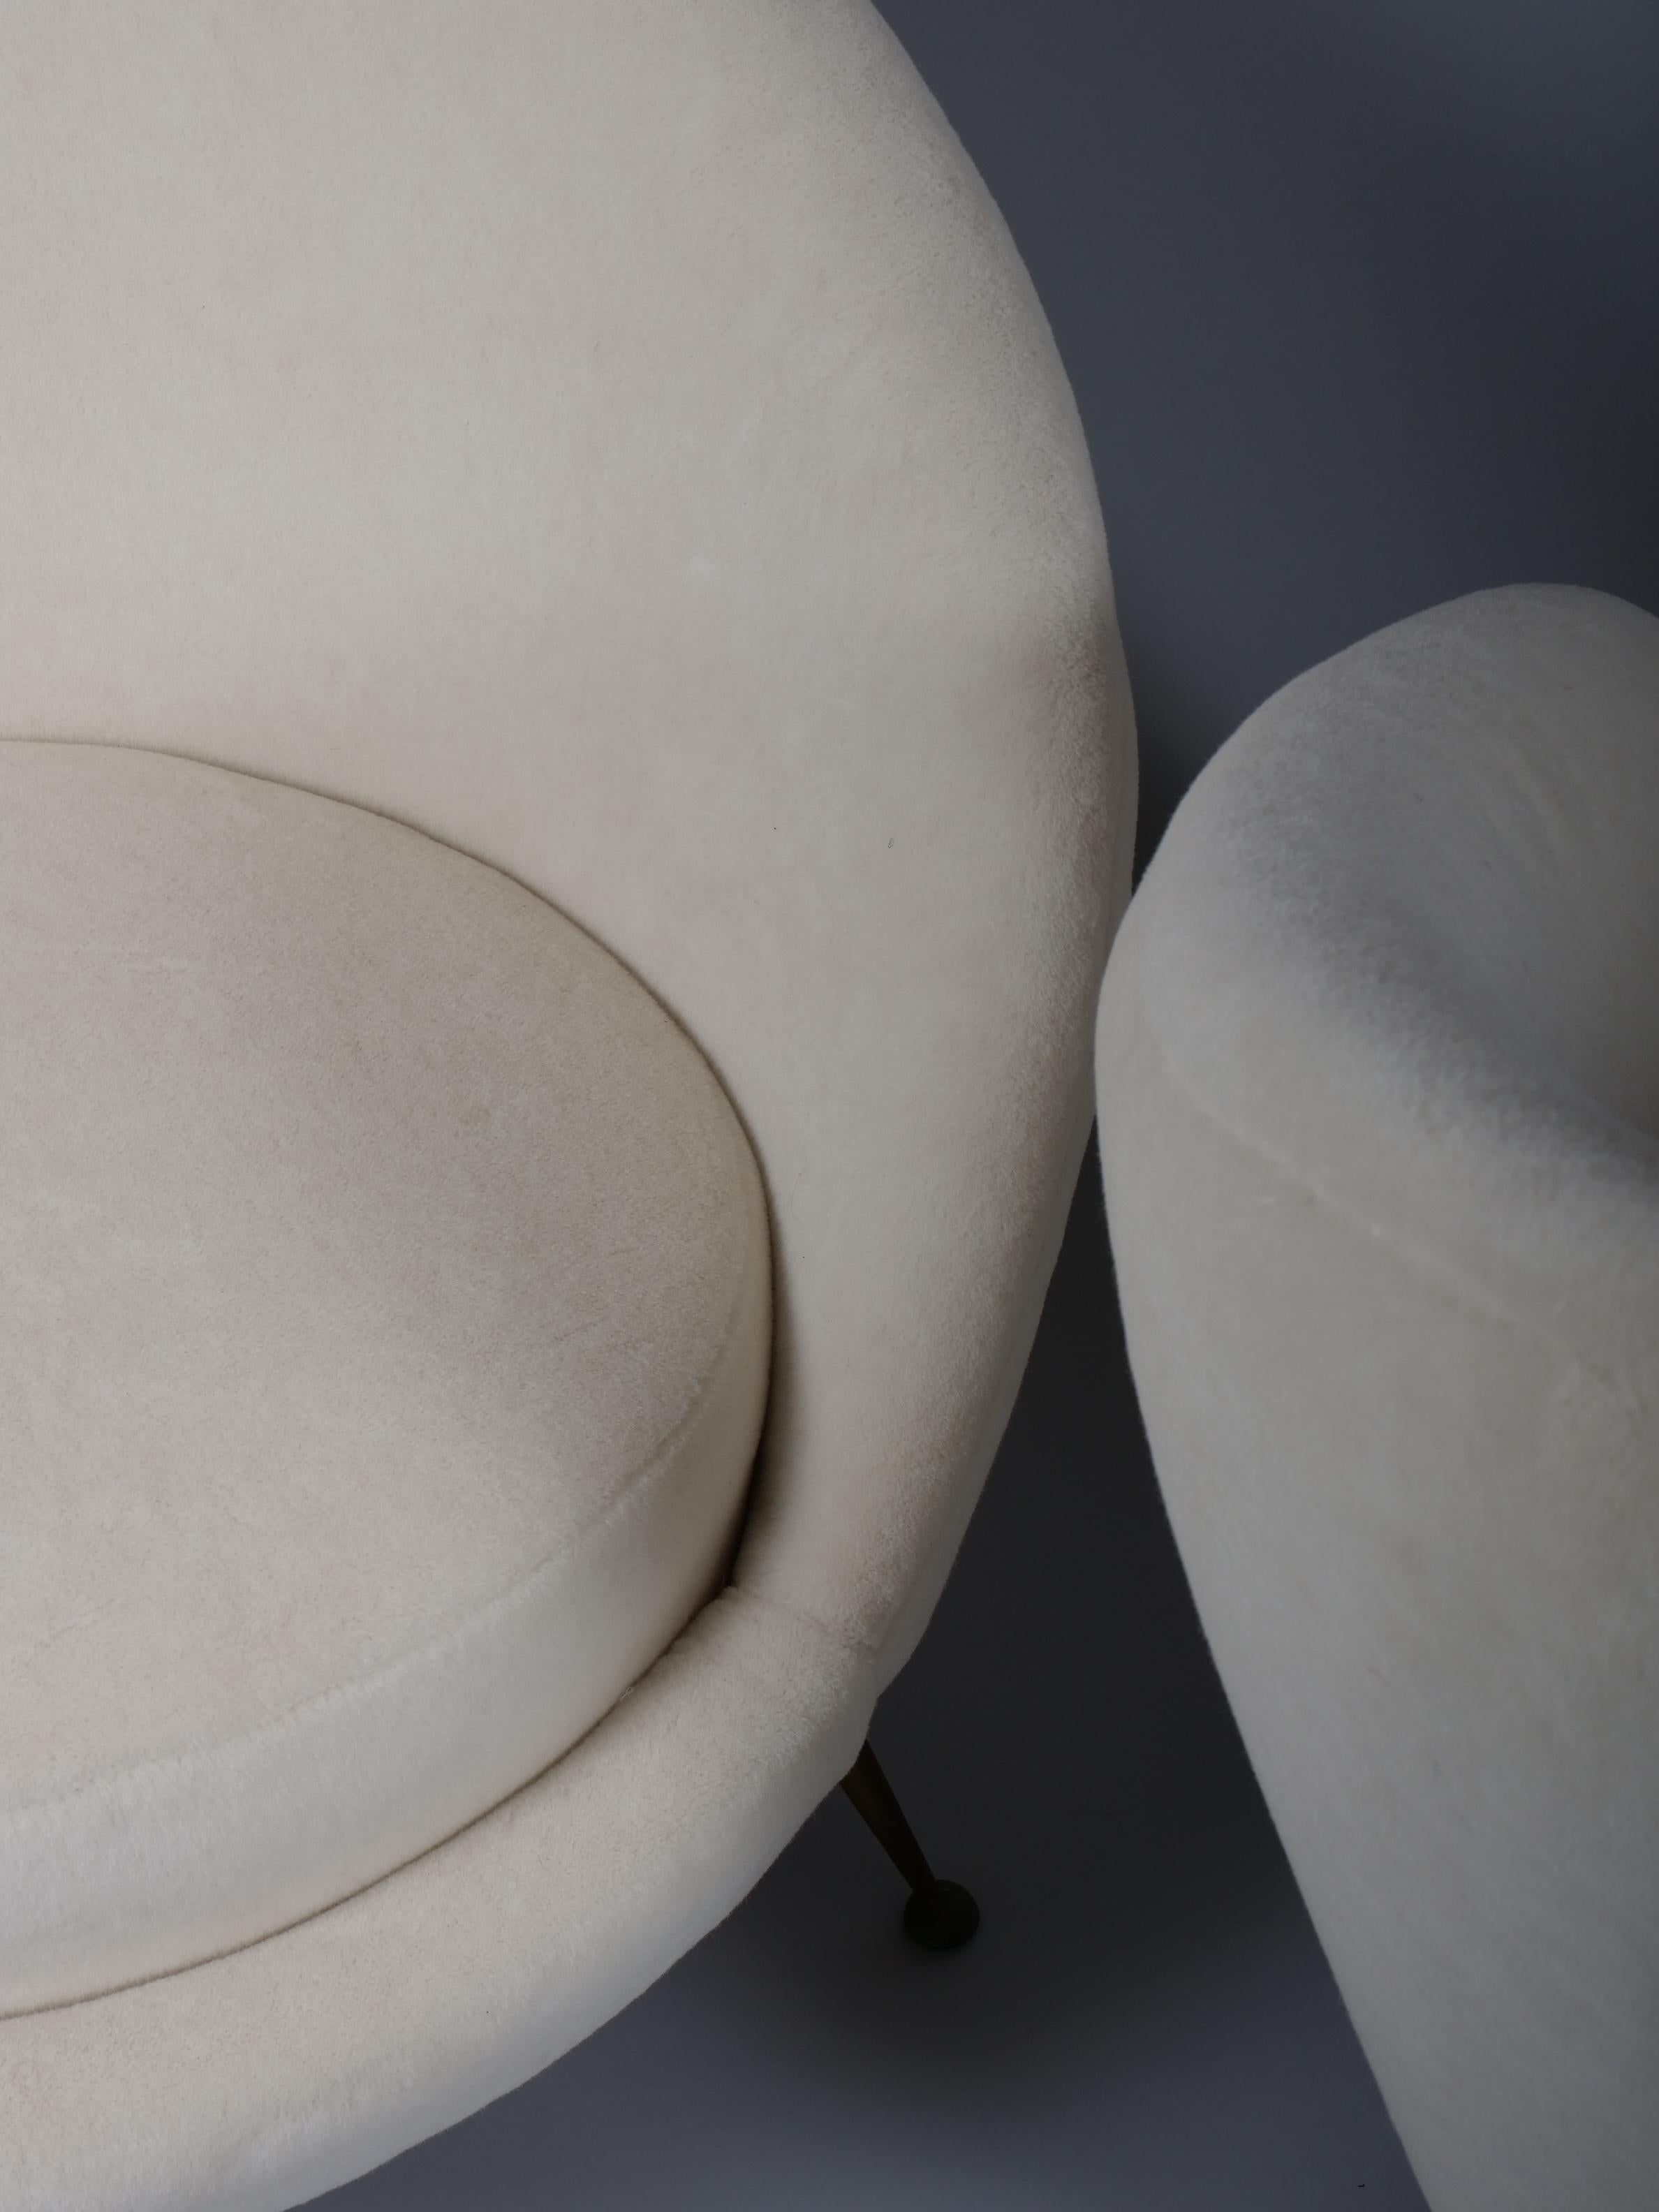 Pair Italian mid century egg shape chairs. Re upholstered in Alpaca wool velvet For Sale 8